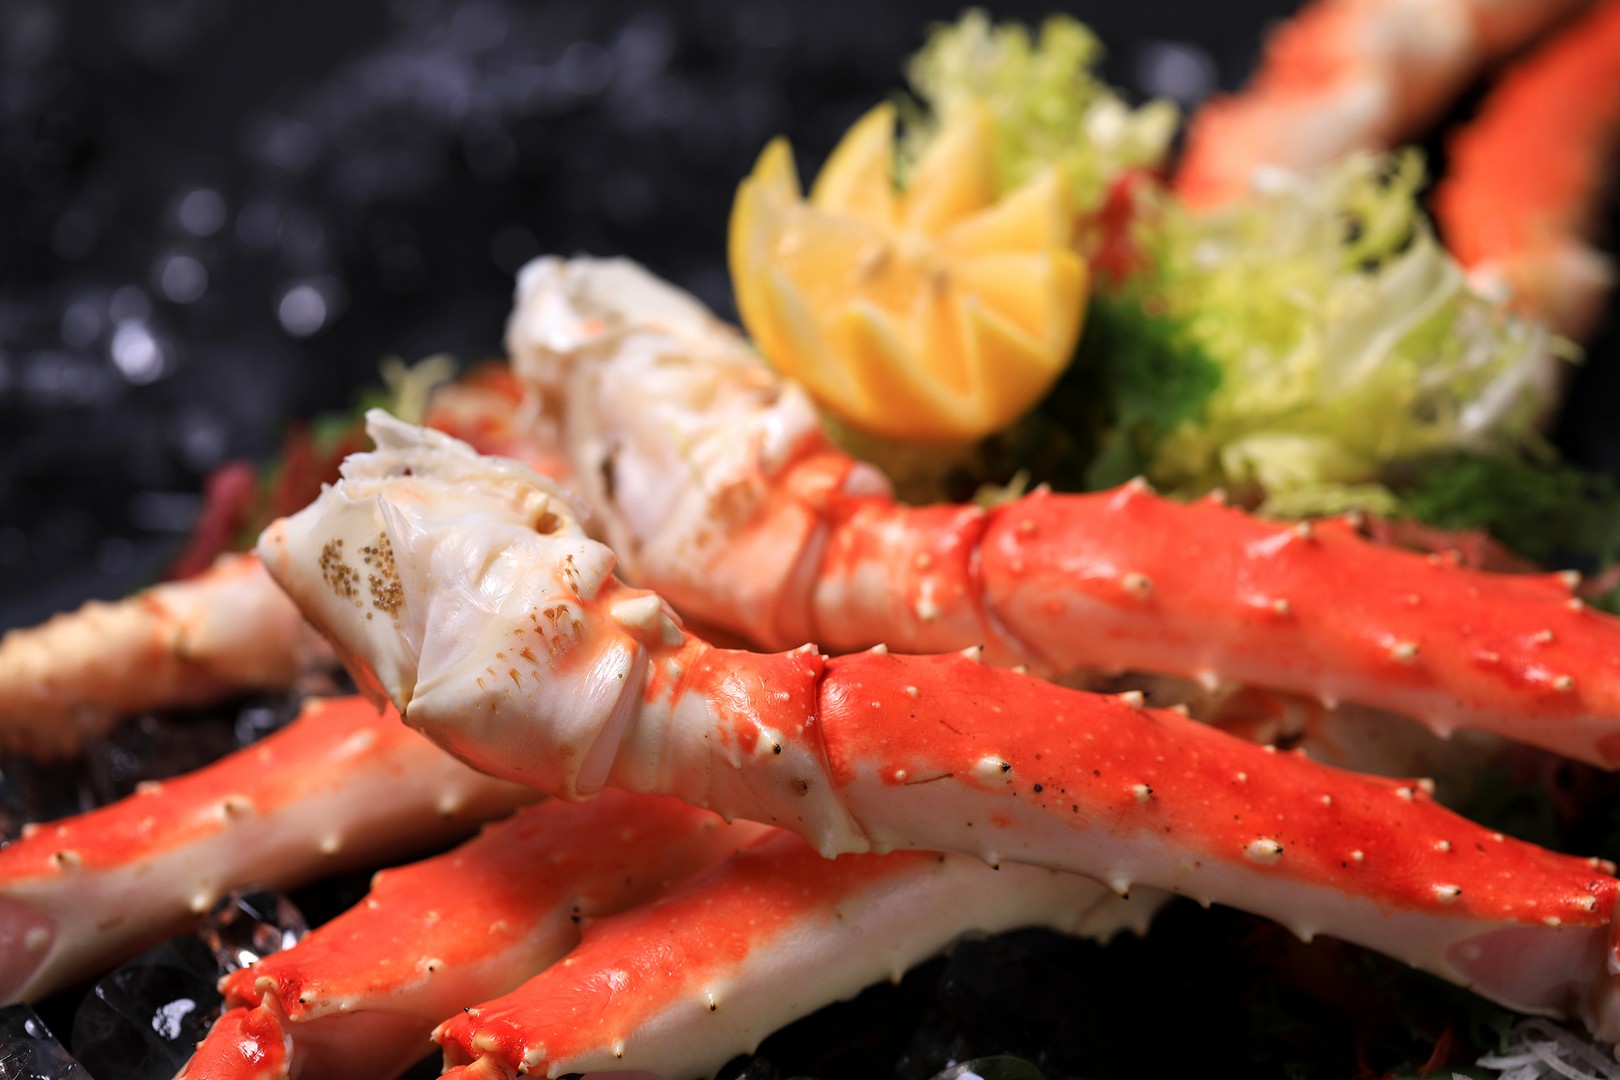 Yamm The Mira Hong Kong - OKiBook Hong Kong and Macau Restaurant Buffet booking 餐廳和自助餐預訂香港和澳門 - Alaska BUffet - 阿拉斯加海鮮盛宴 - Sweet and delicious Alaska king crab legs